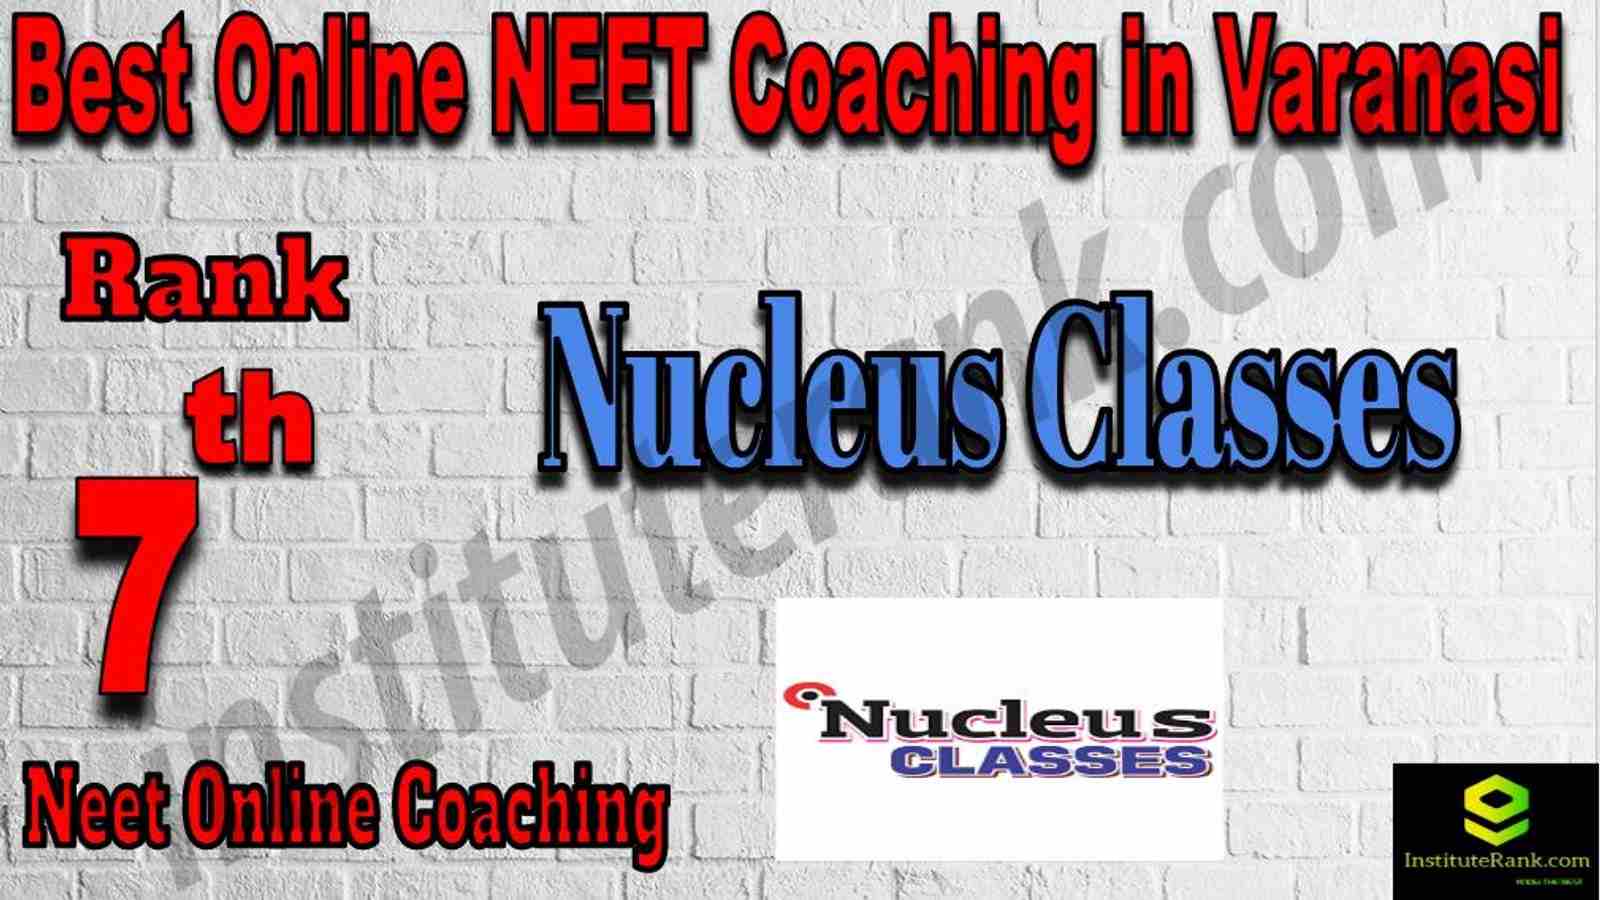 7th Best Online Neet Coaching in Varanasi